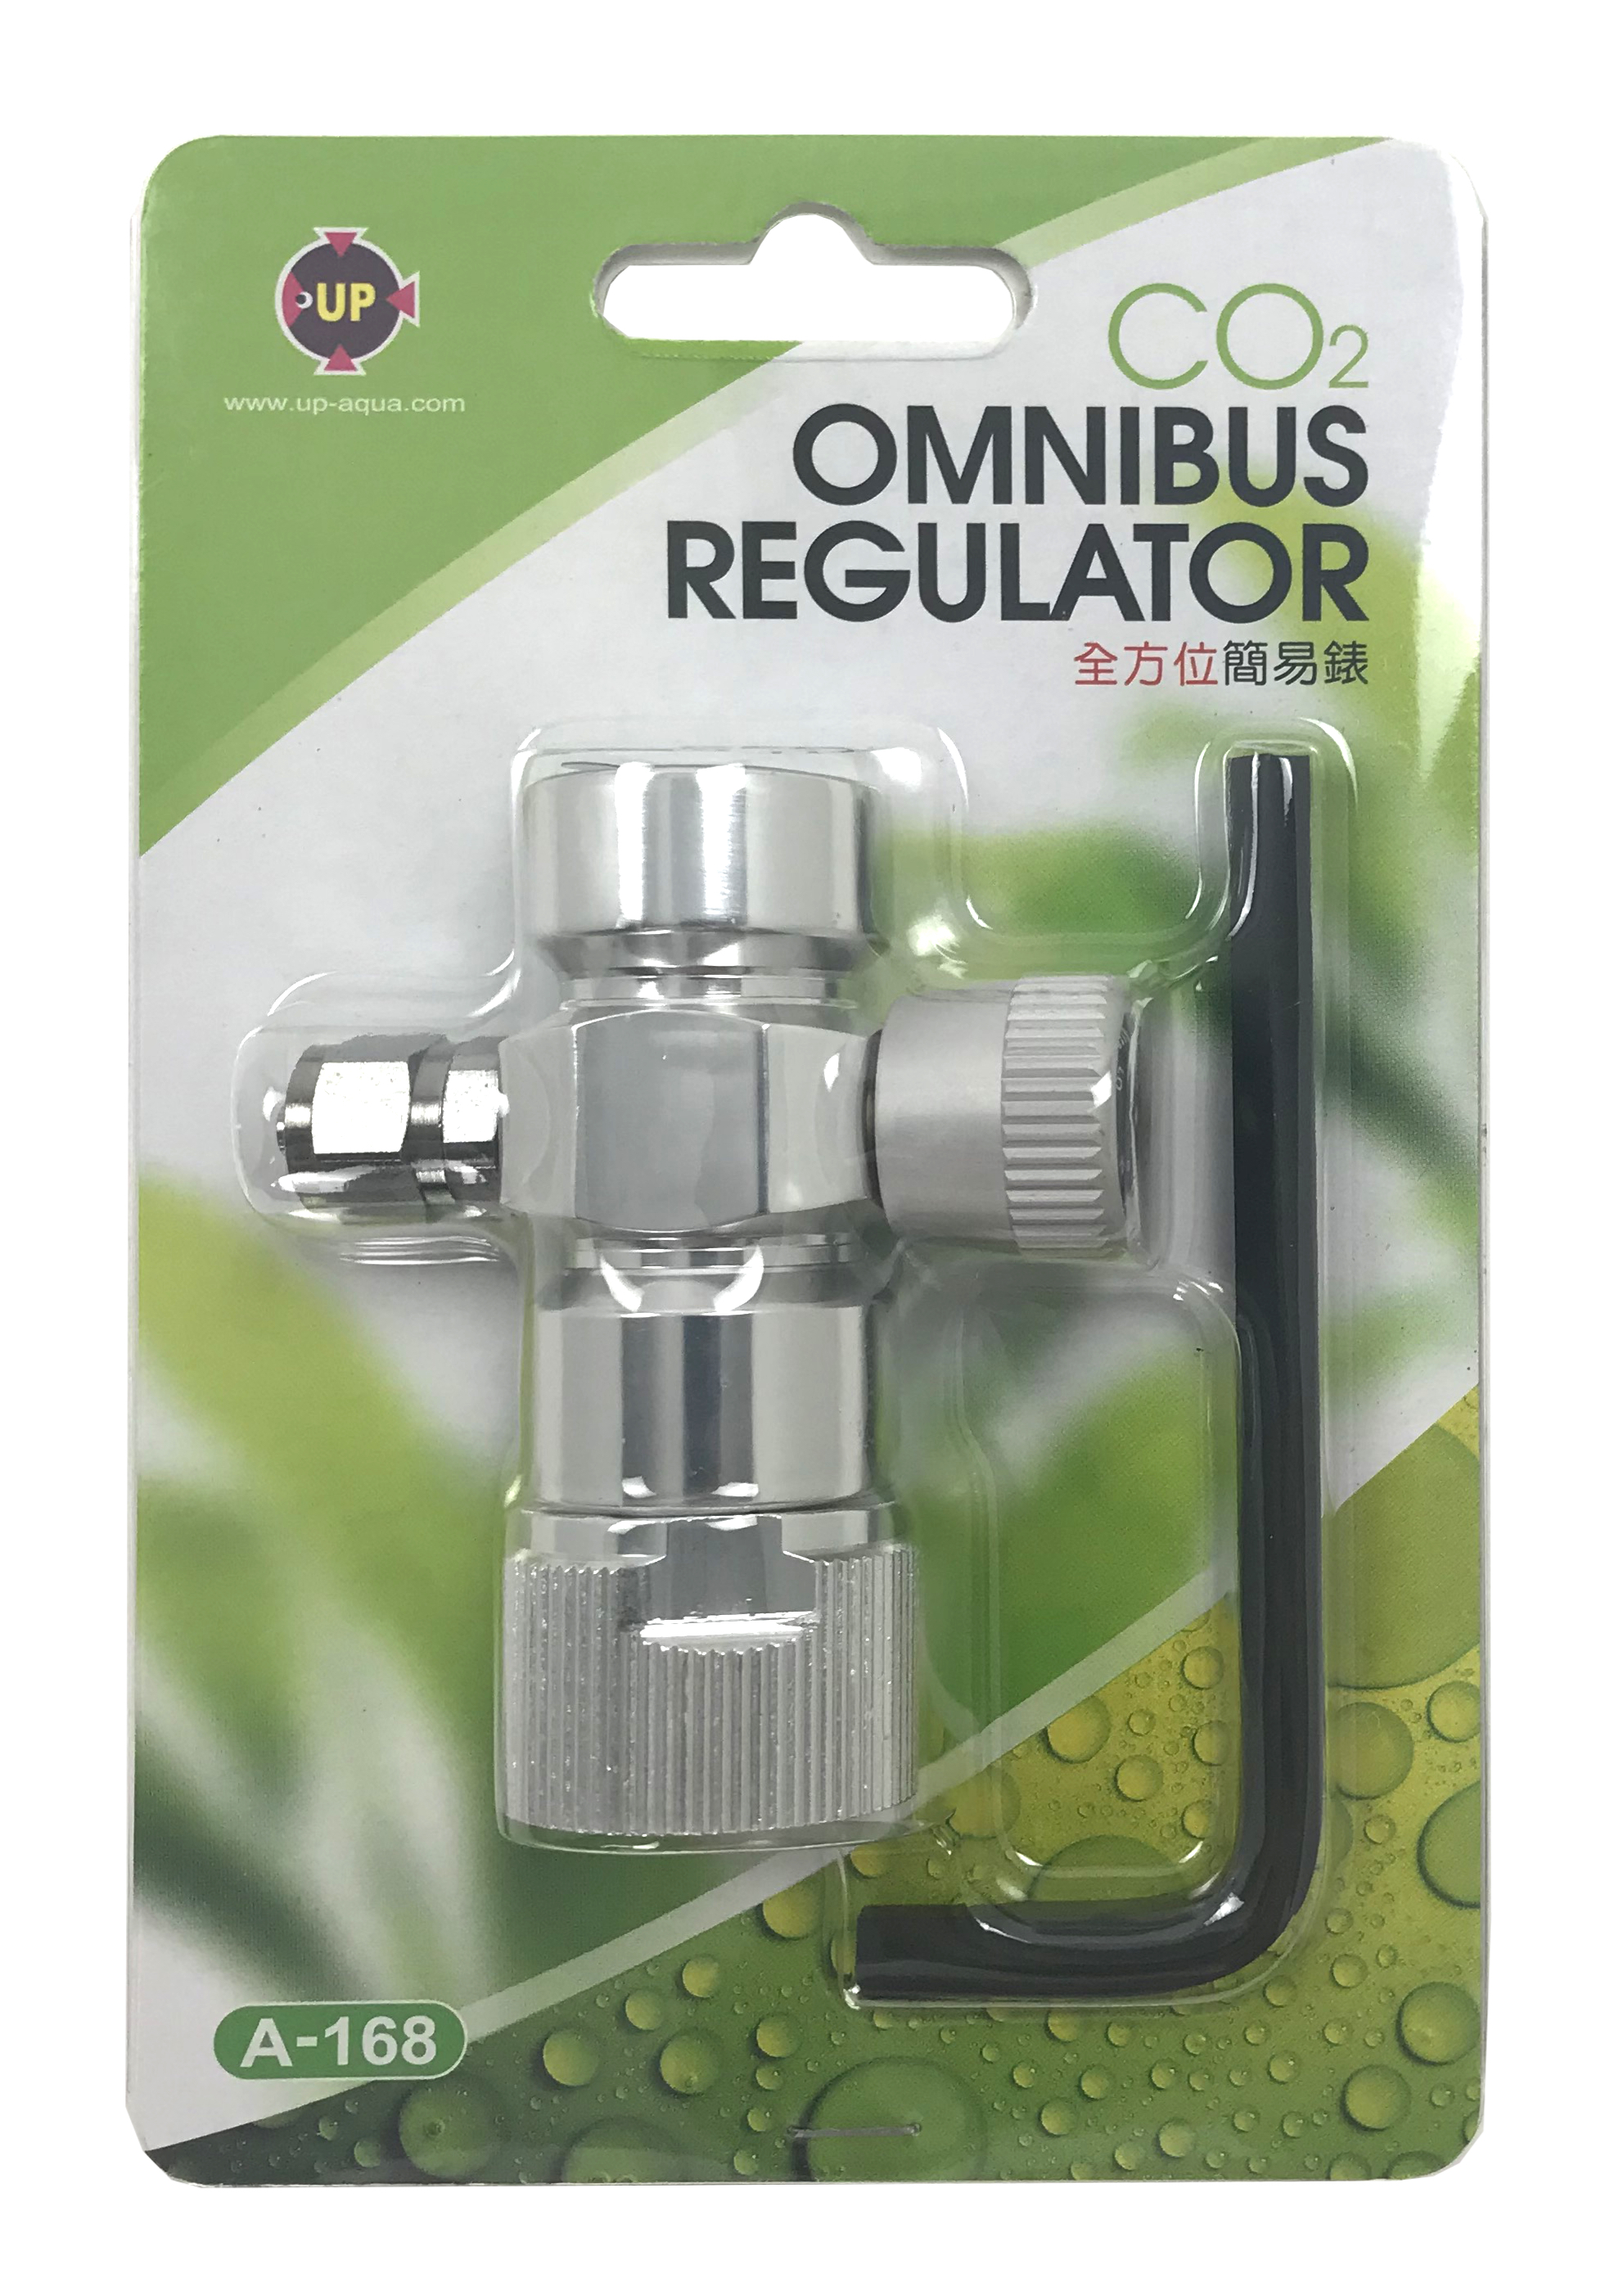 CO2 Omnibus Regulator for Disposable Cartridge or Regular CO2 tanks